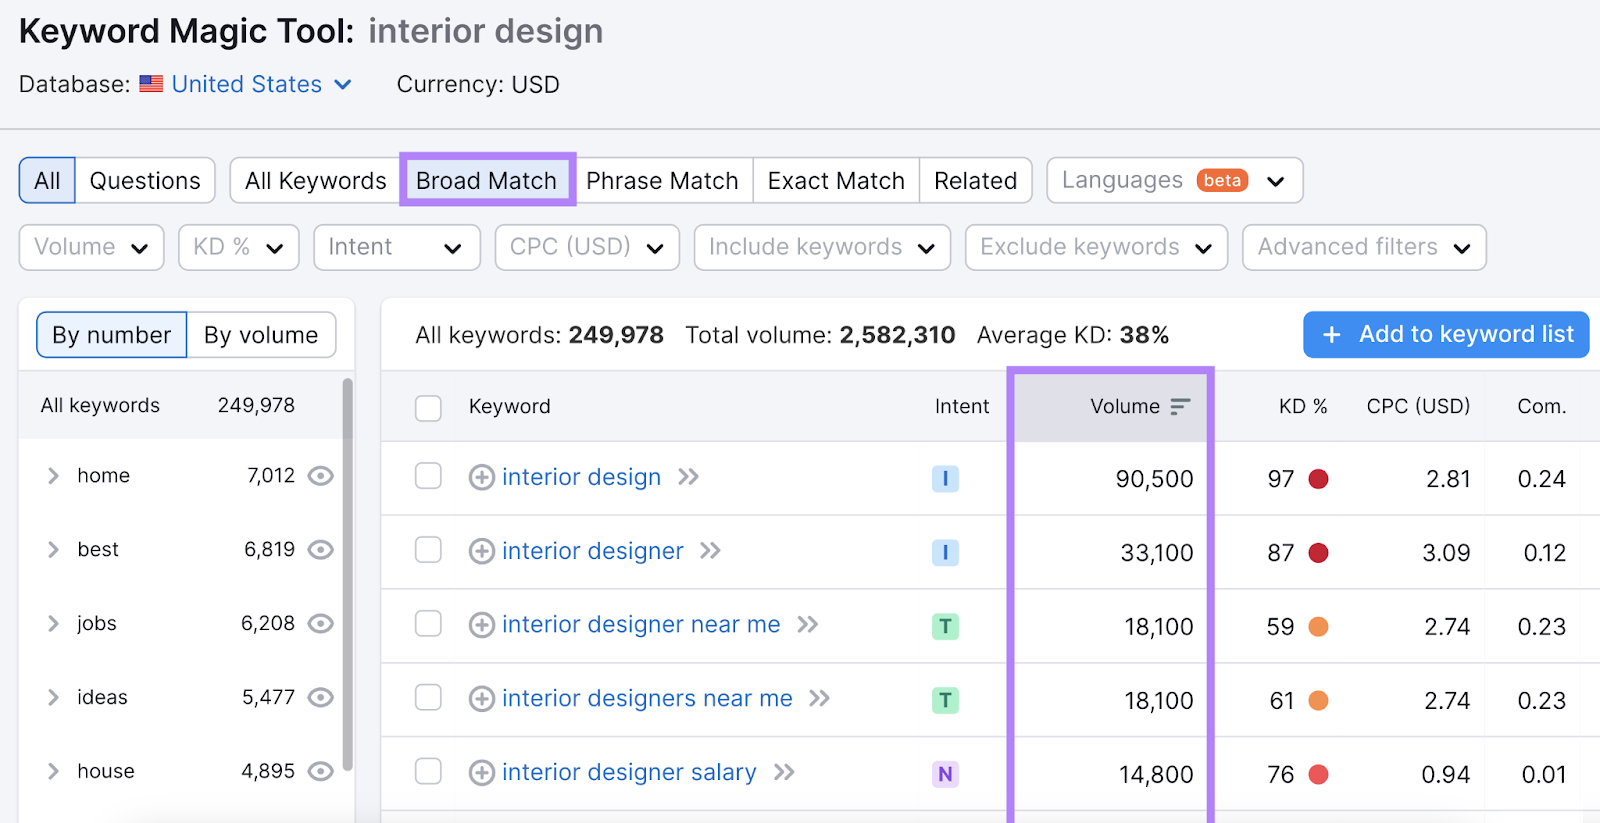 "Broad Match" keyword results for "interior design"